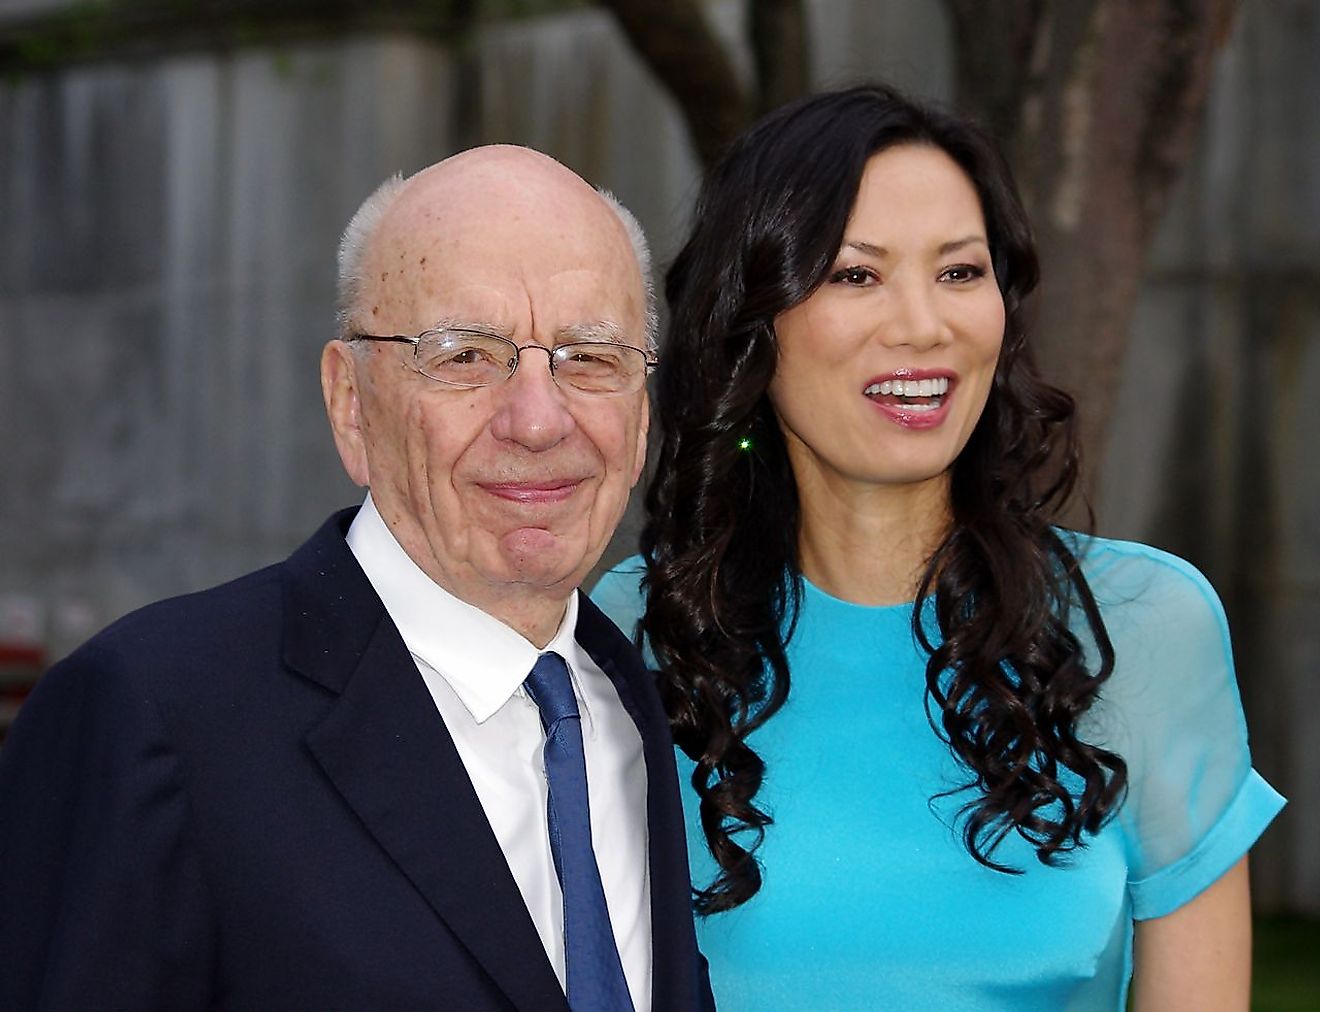 Murdoch with his third wife, Wendi, in 2011. Image credit: David Shankbone/Wikimedia.org